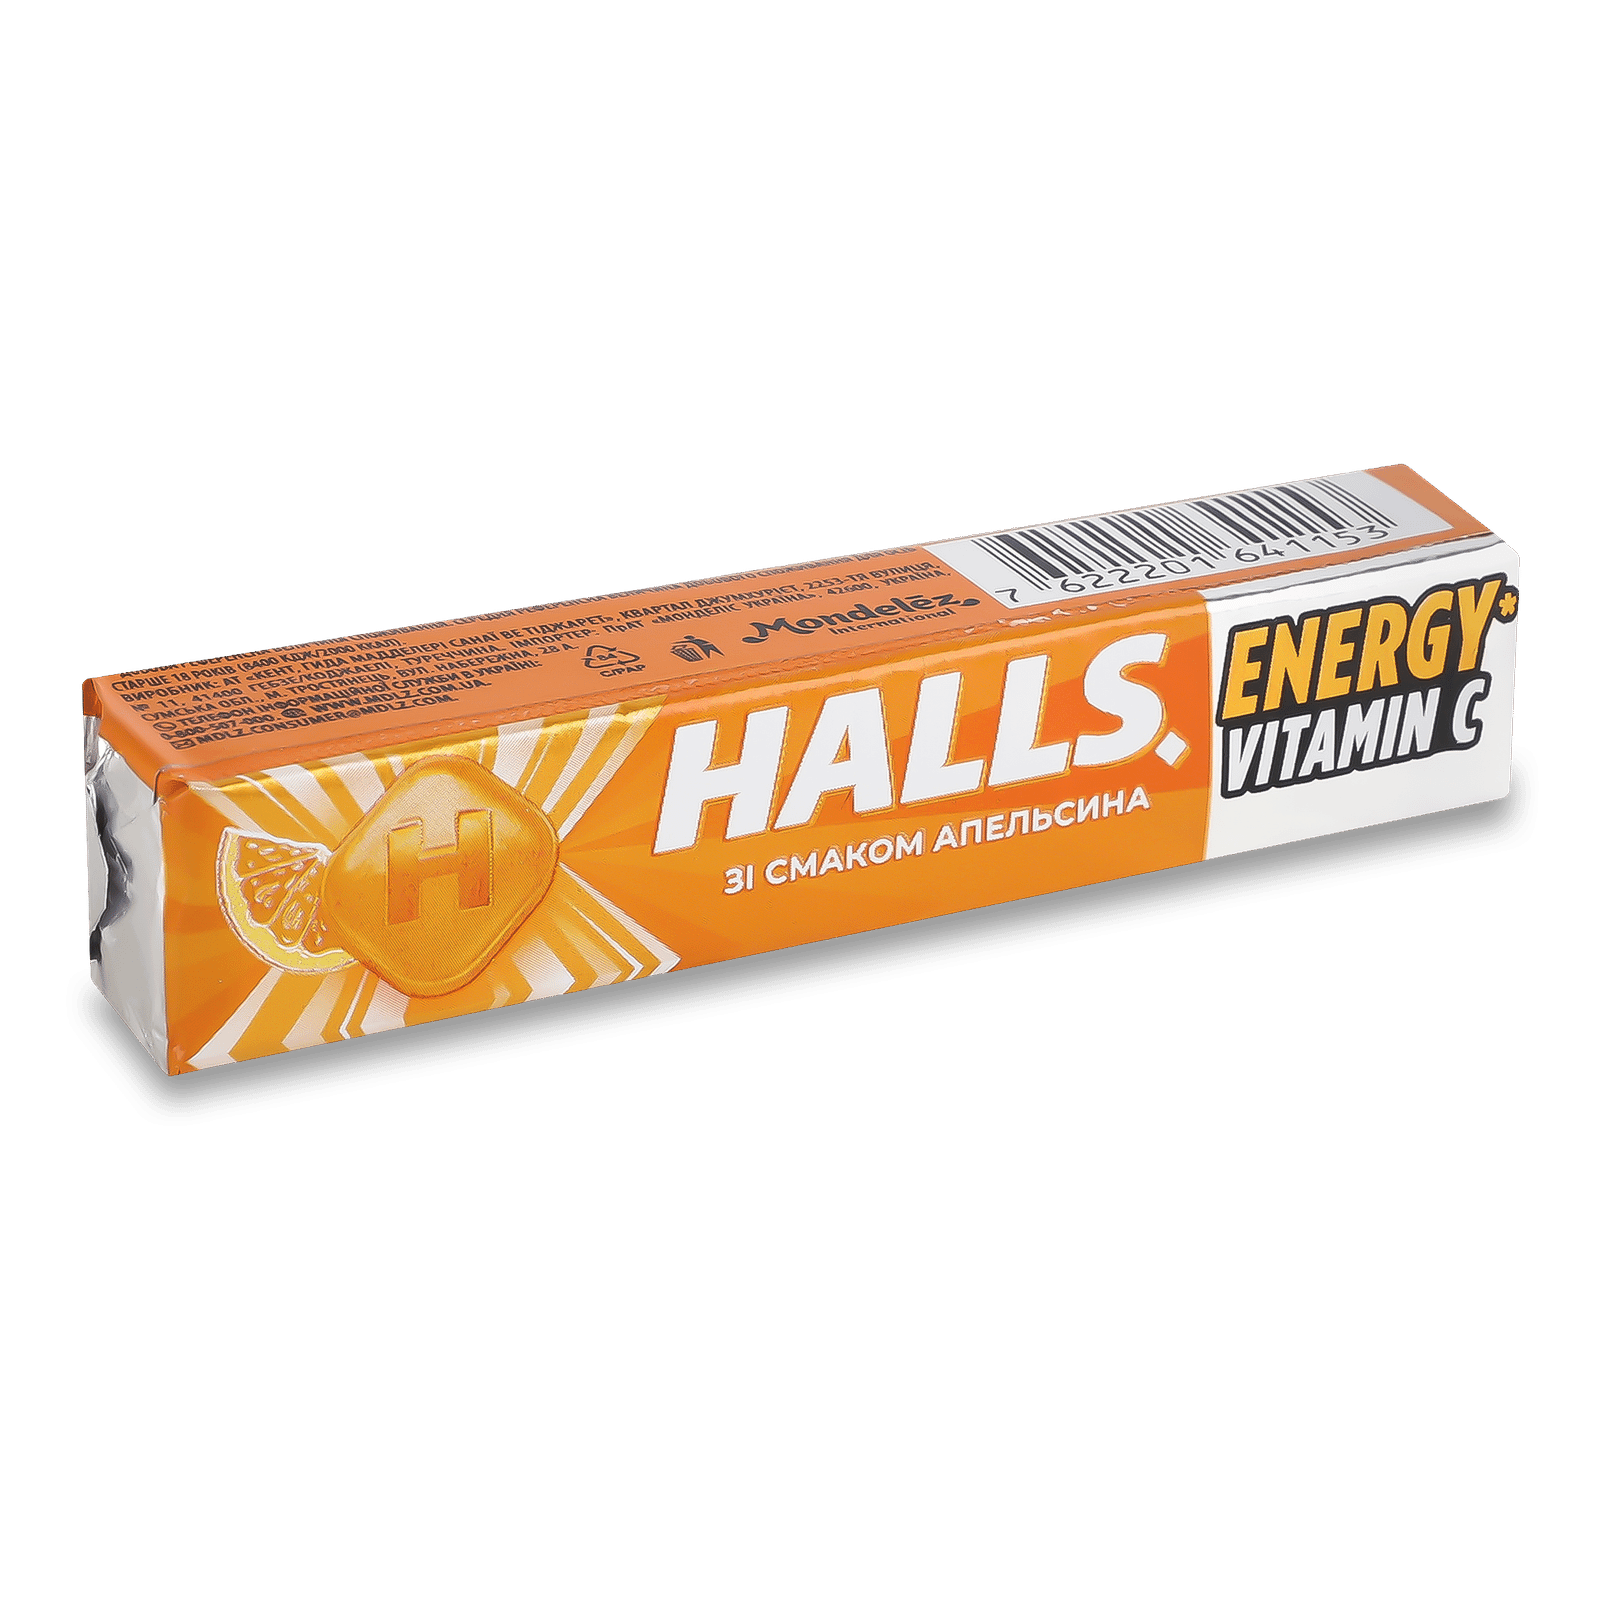 Льодяники Halls зі смаком апельсина - 1